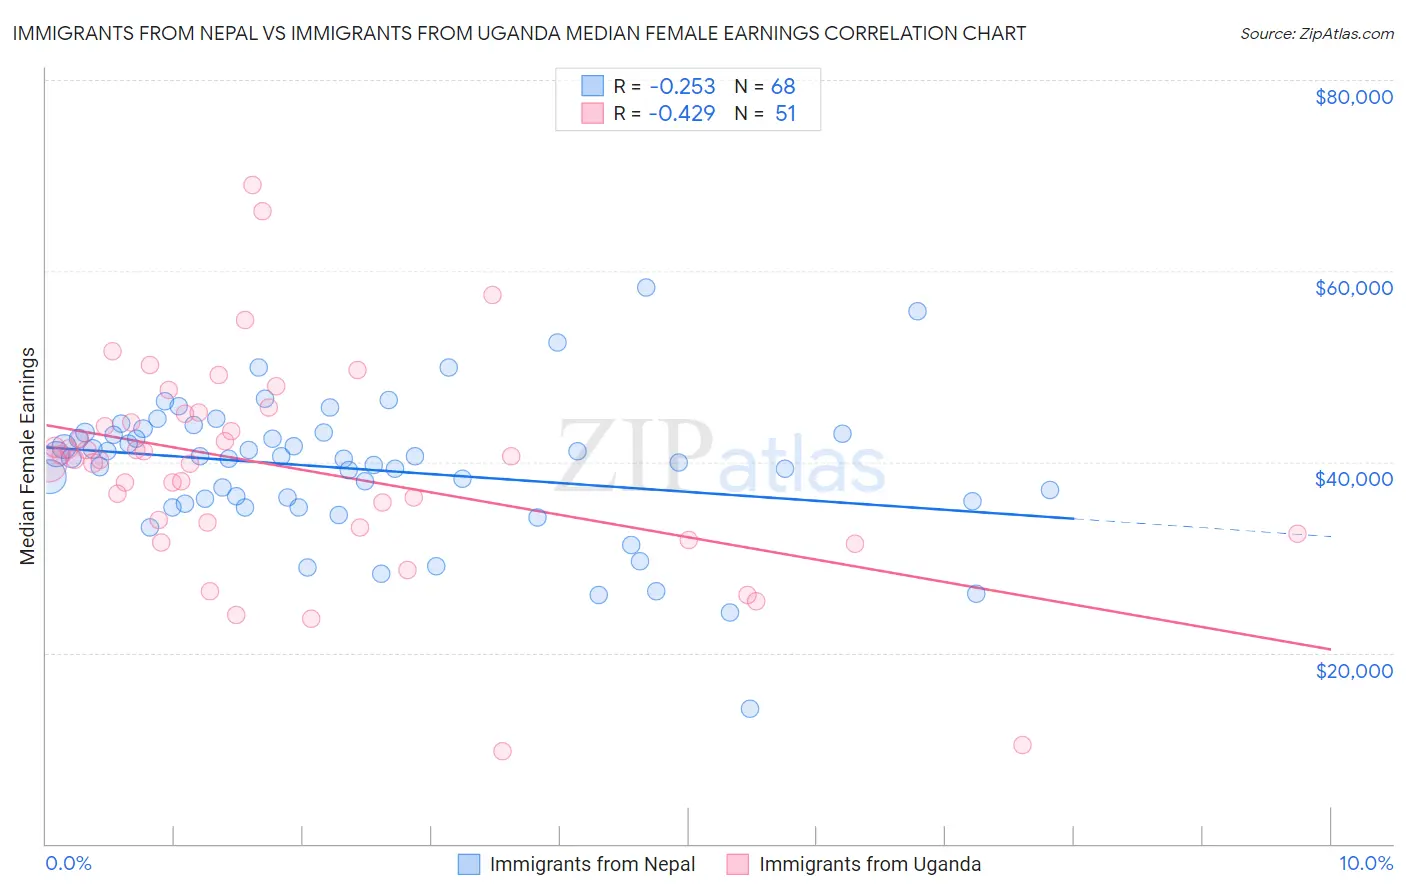 Immigrants from Nepal vs Immigrants from Uganda Median Female Earnings